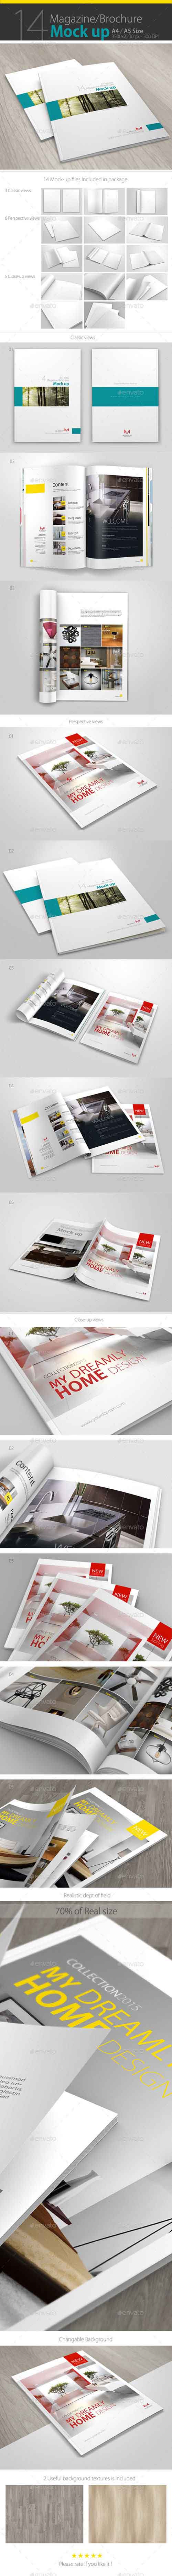 GraphicRiver: A4 Brochure / Magazine Mock-up